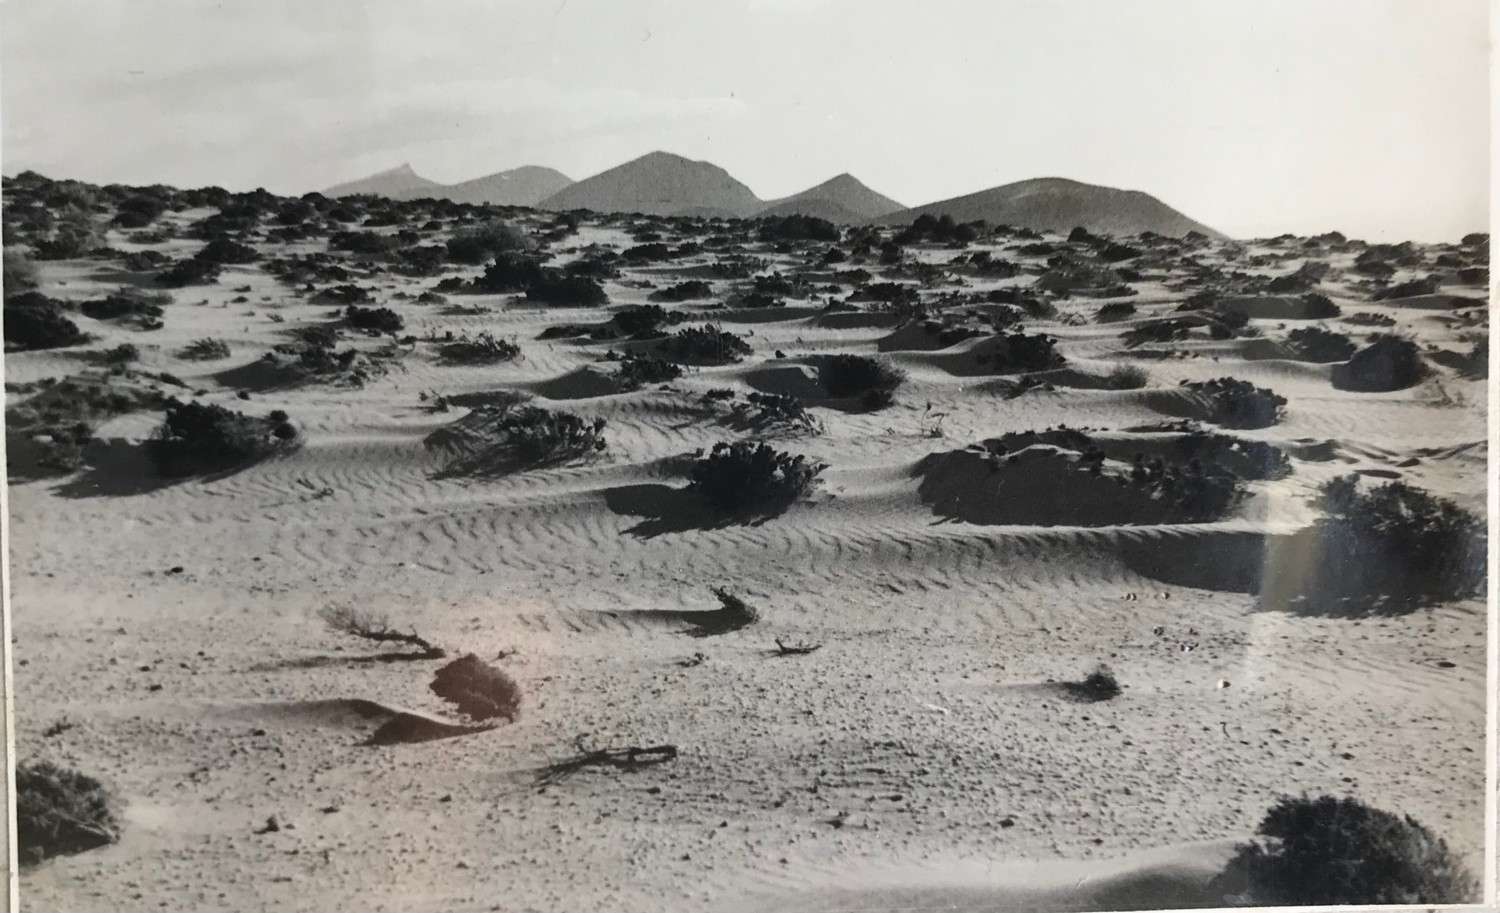 El Jable 10 km de dunas que incomunican Jandia